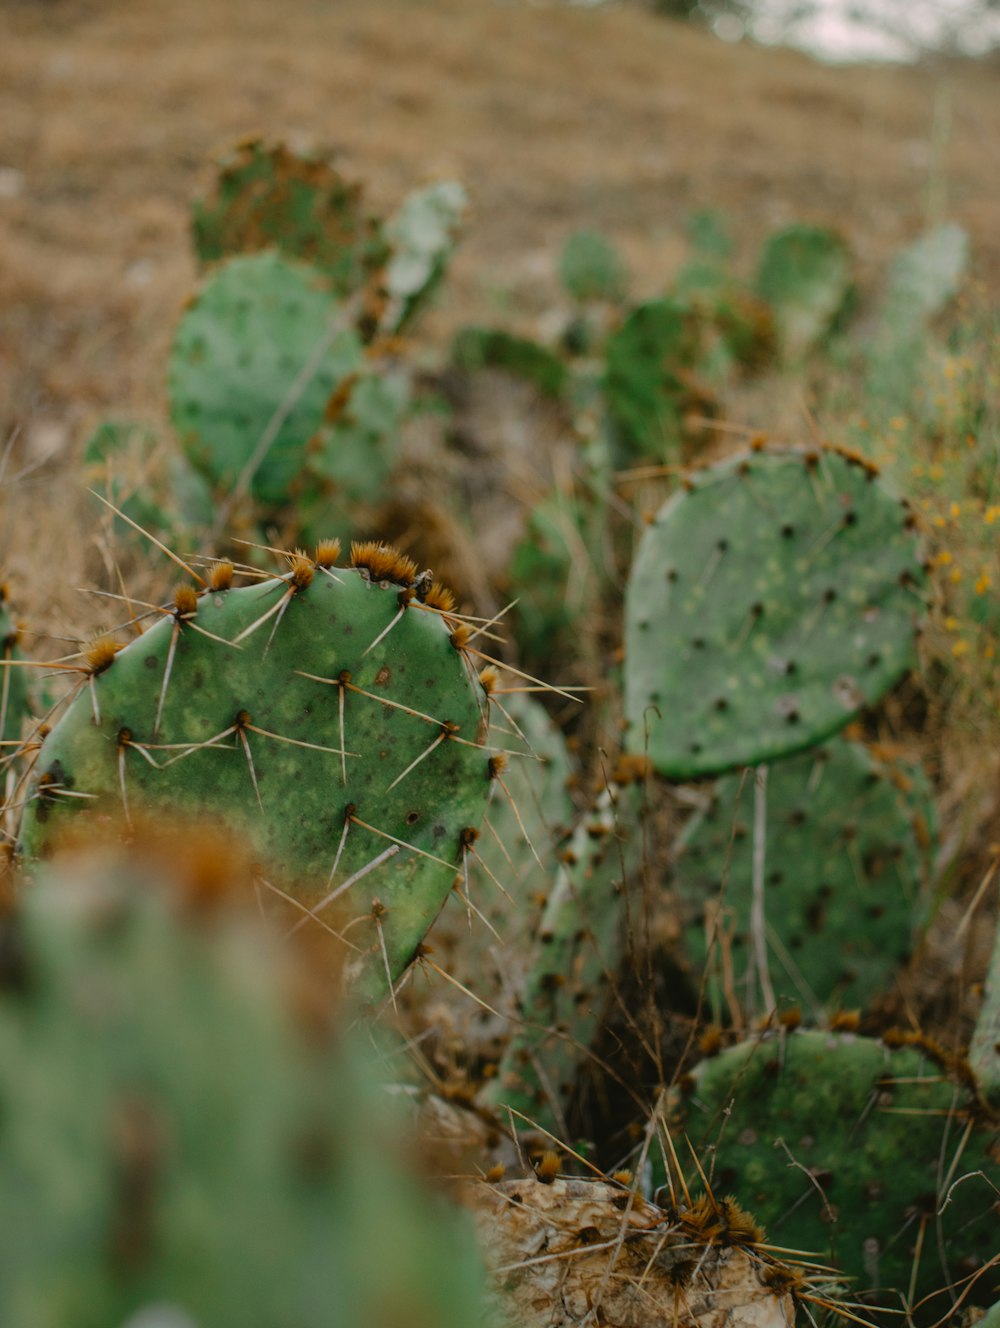 a close-up of a cactus